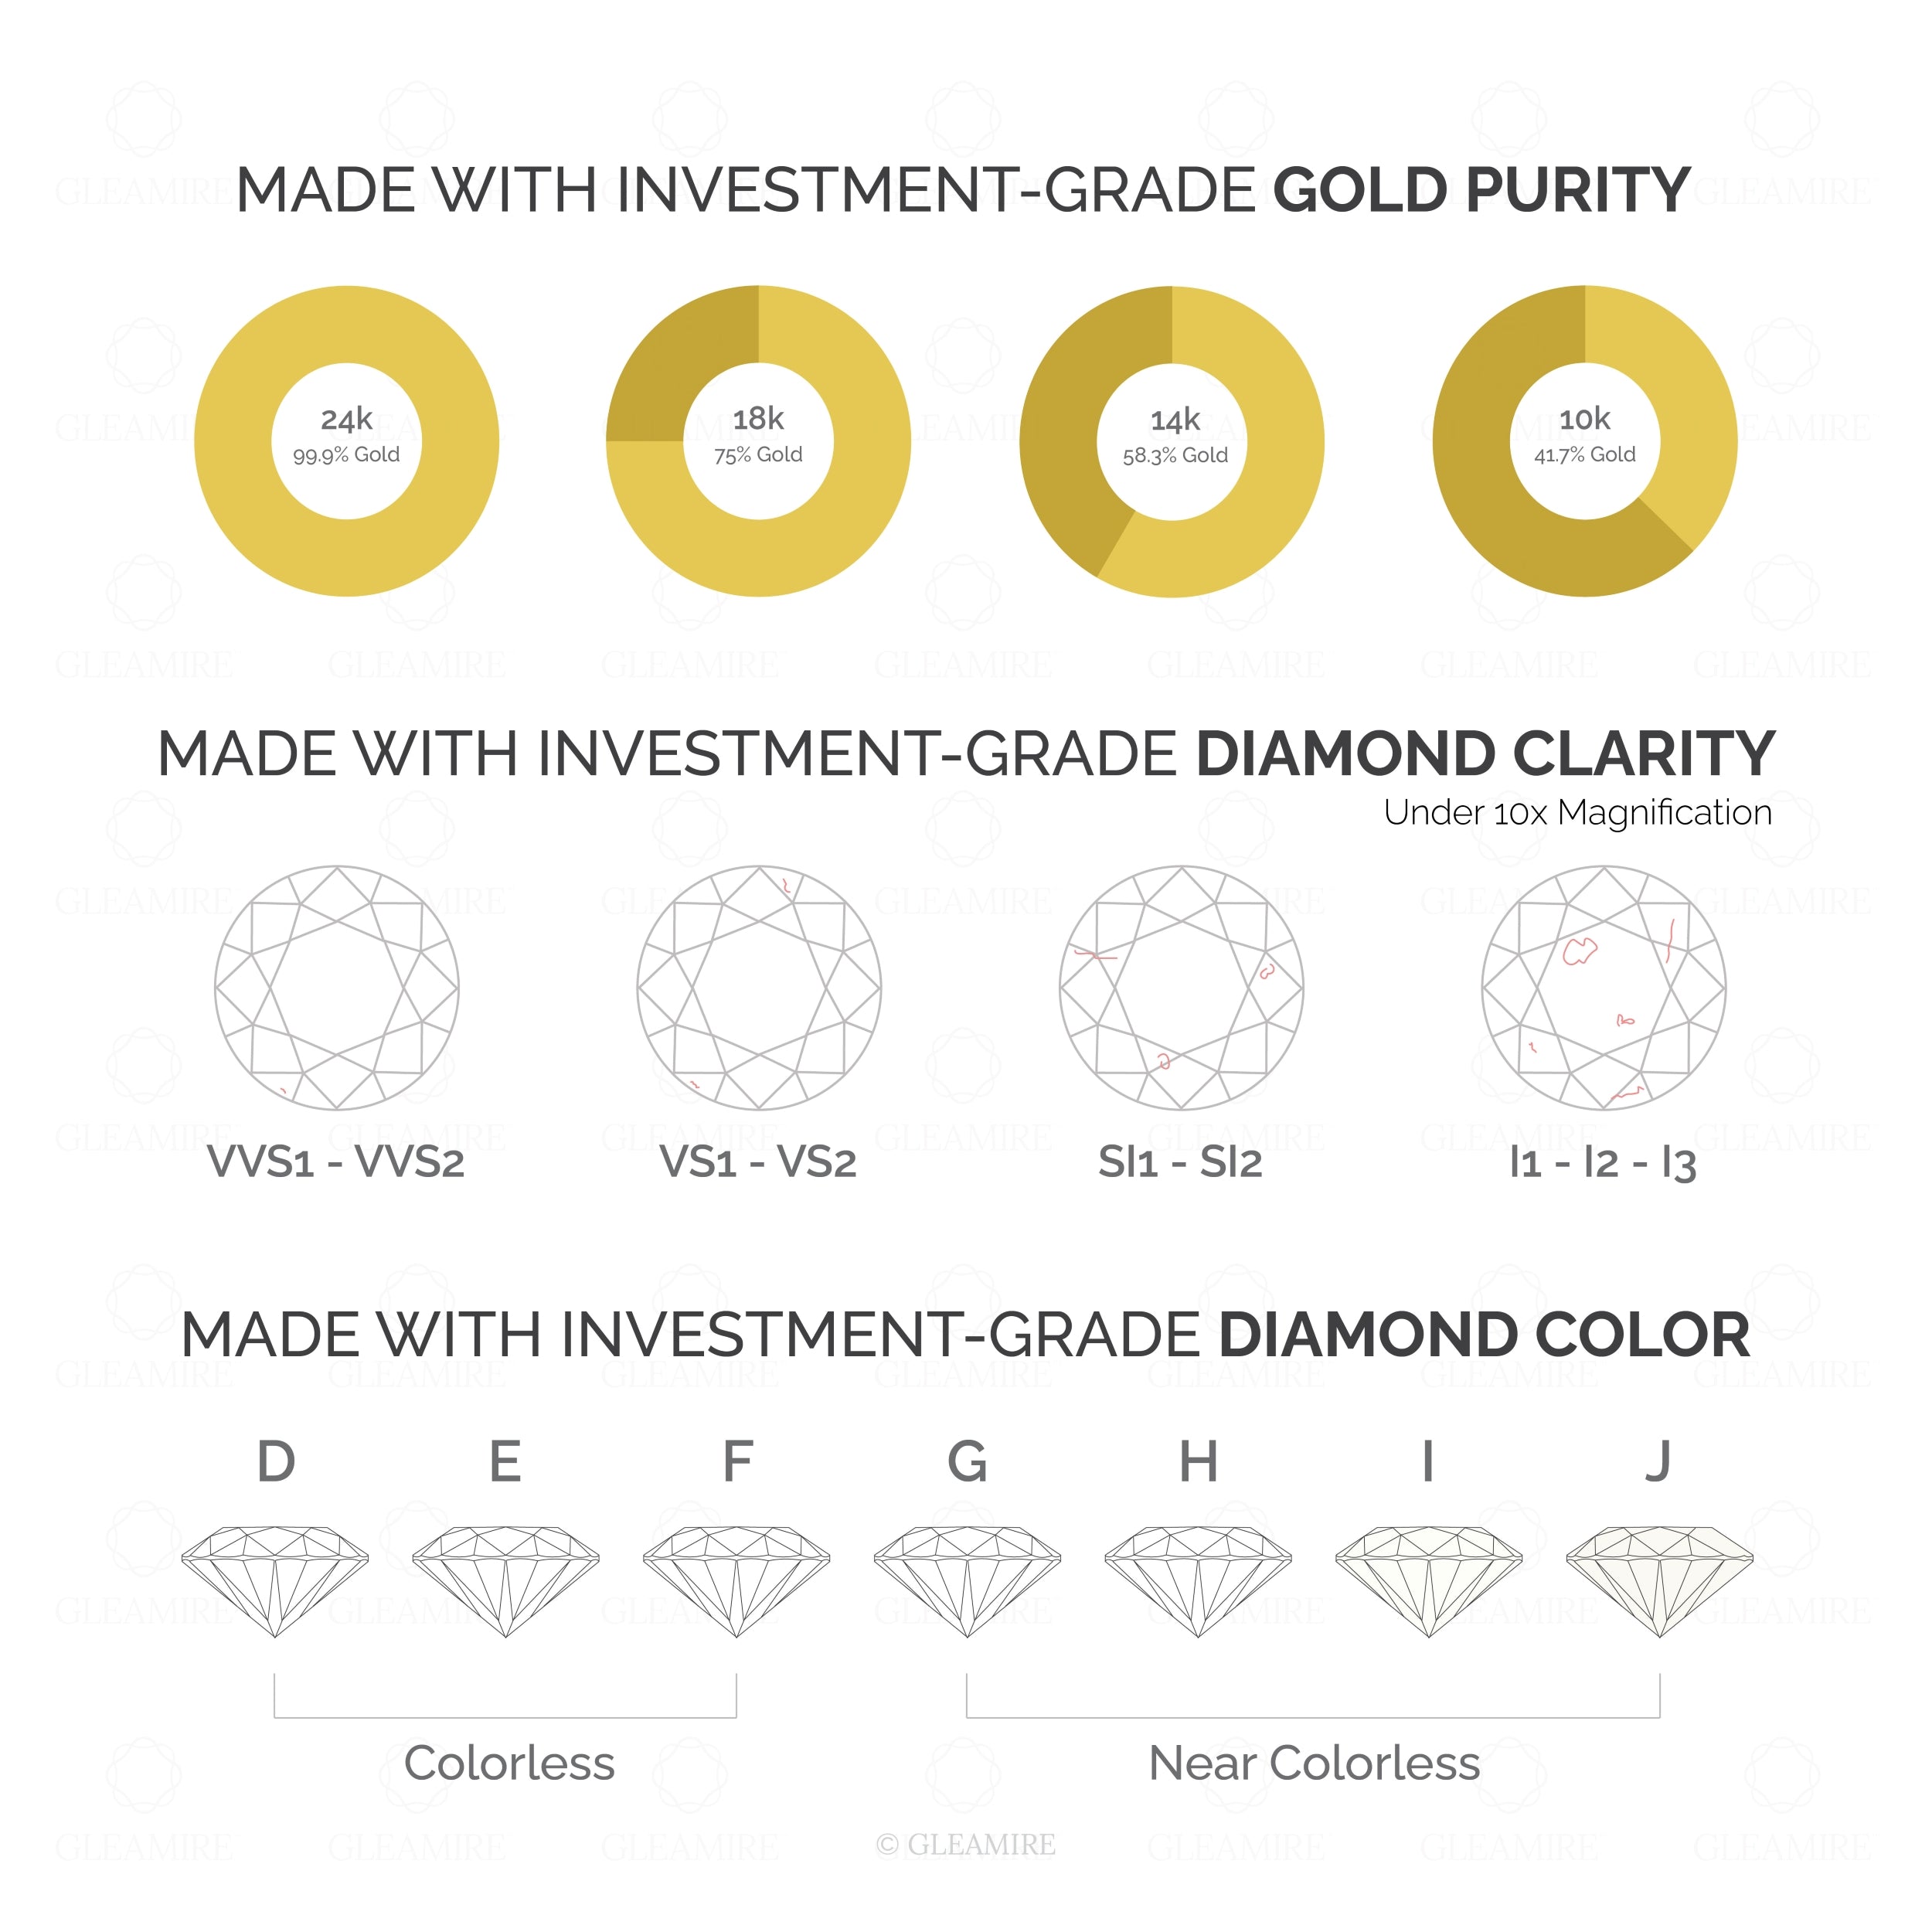 Certified 14K Gold .2ct Natural Diamond F-VS Evil Eye White Necklace Earrings Set